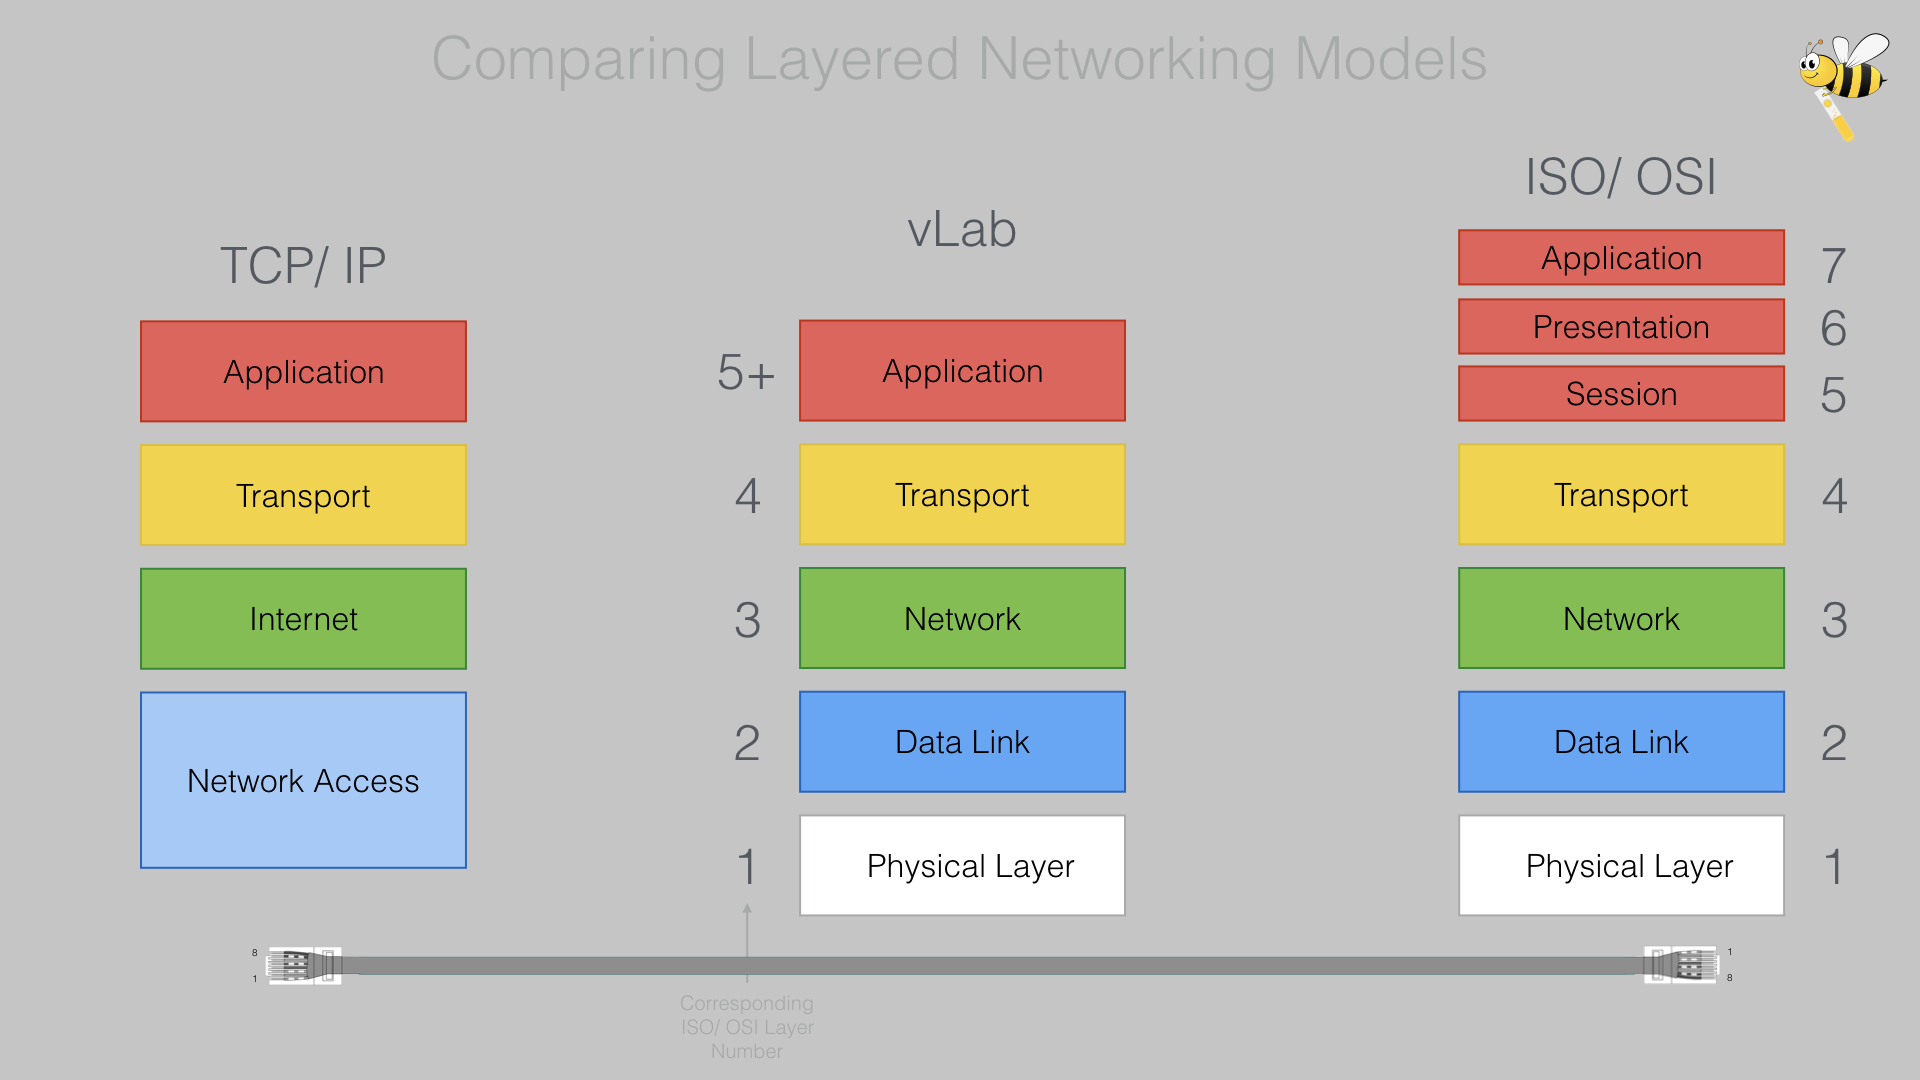 The vLab network model